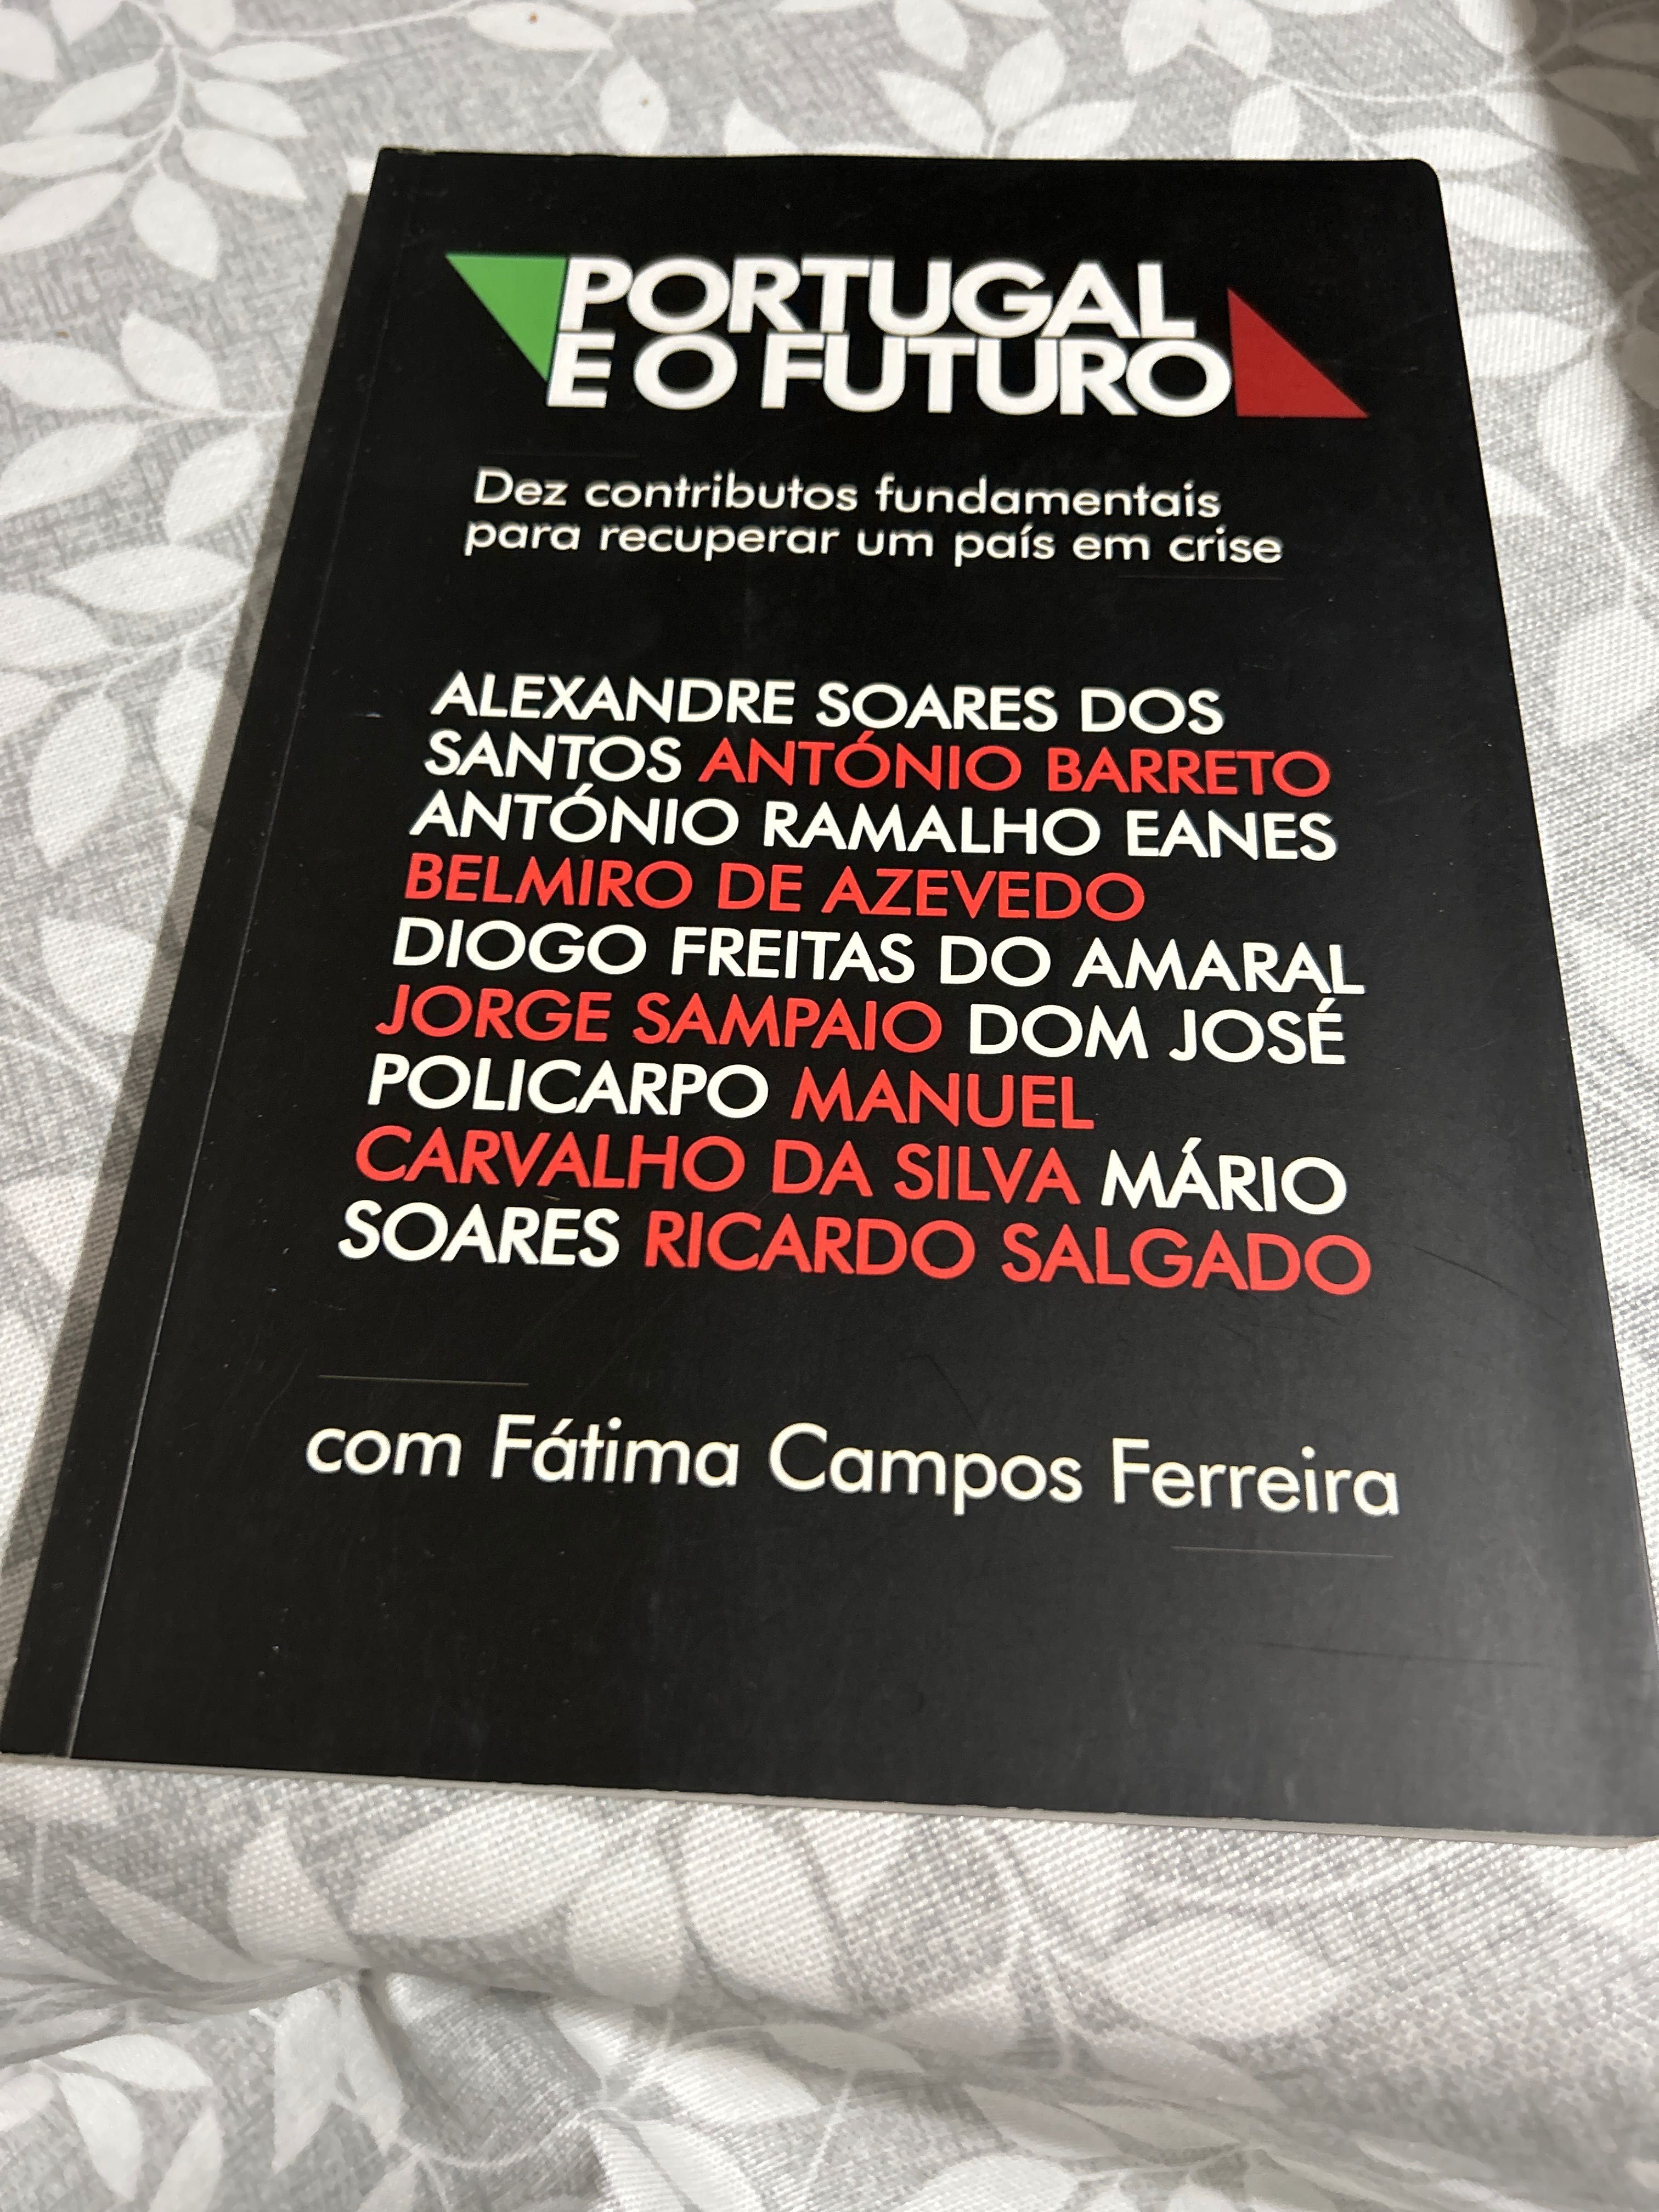 Livro “Portugal e o futuro”